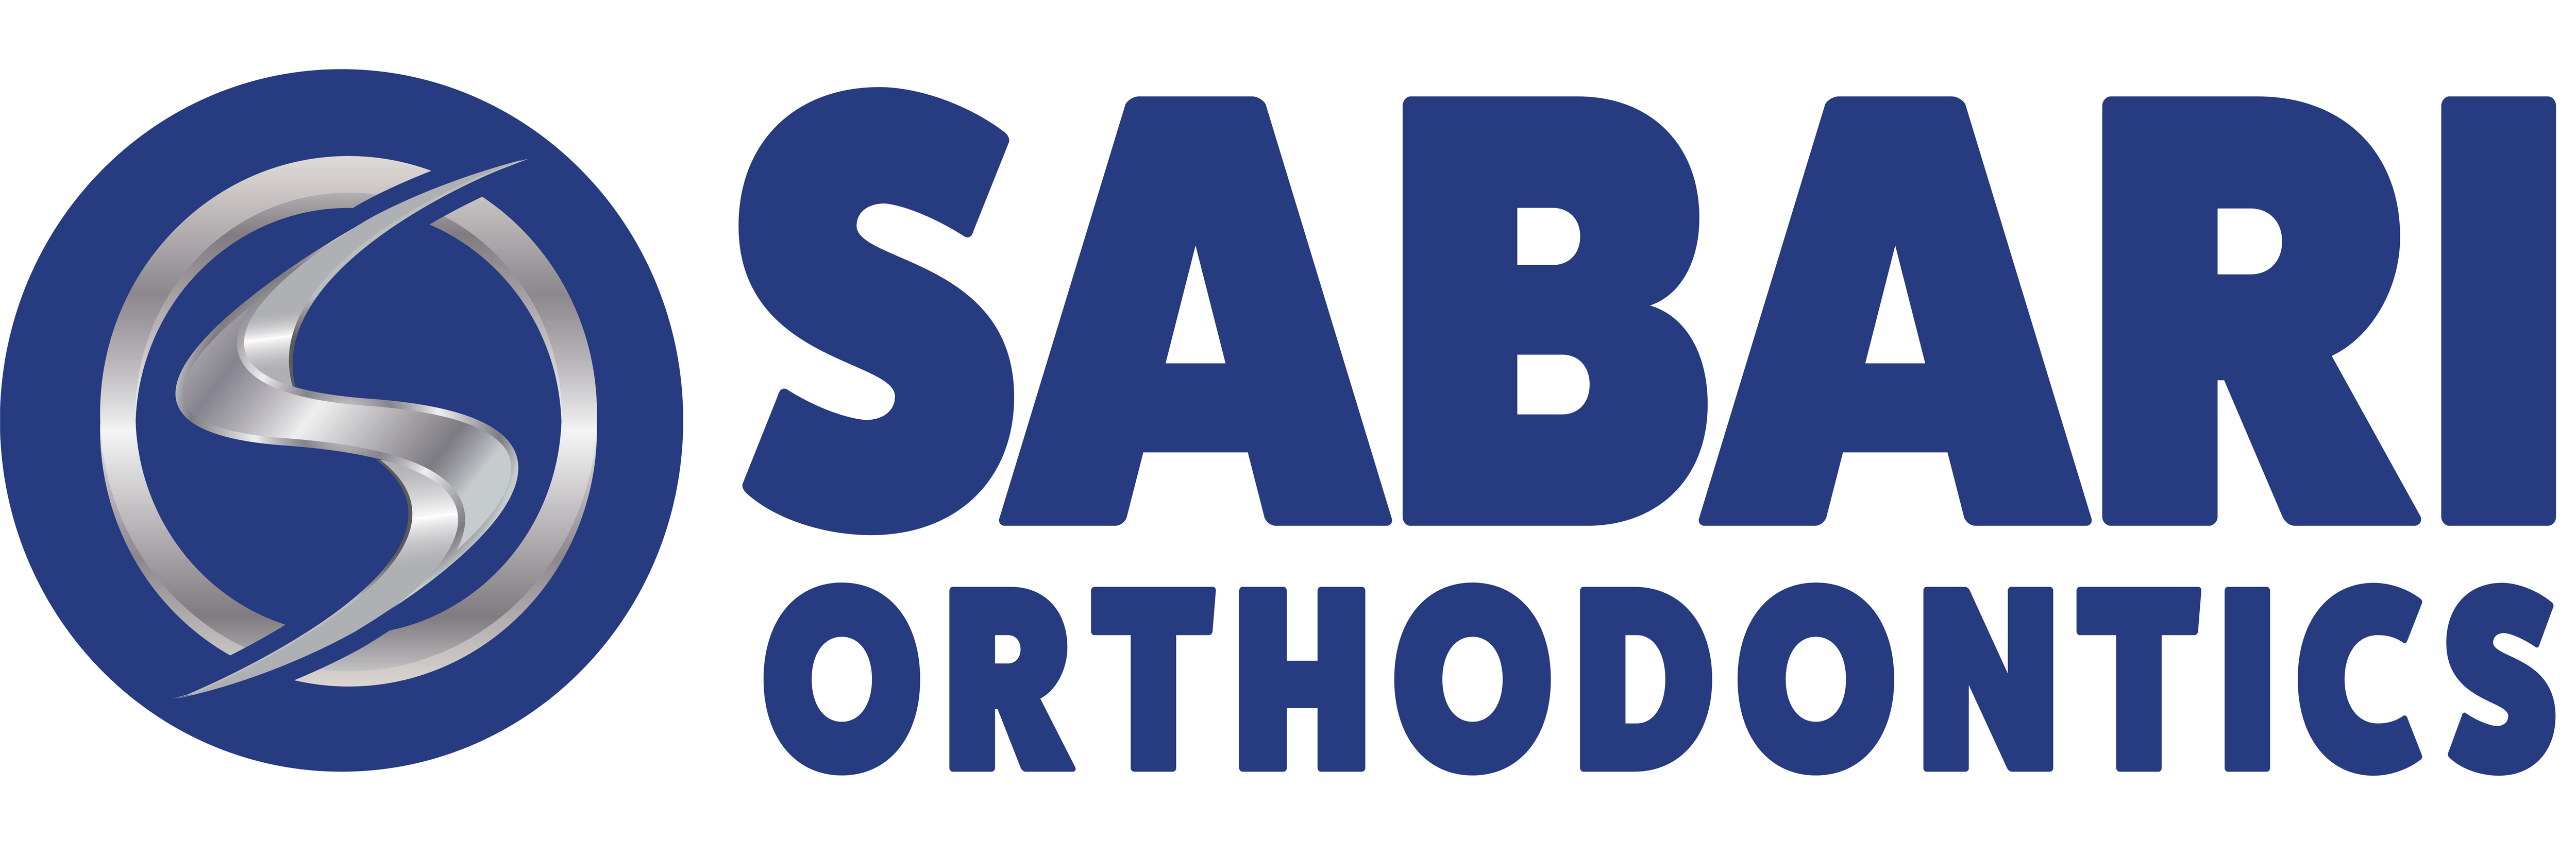 Sabari Orthodontics